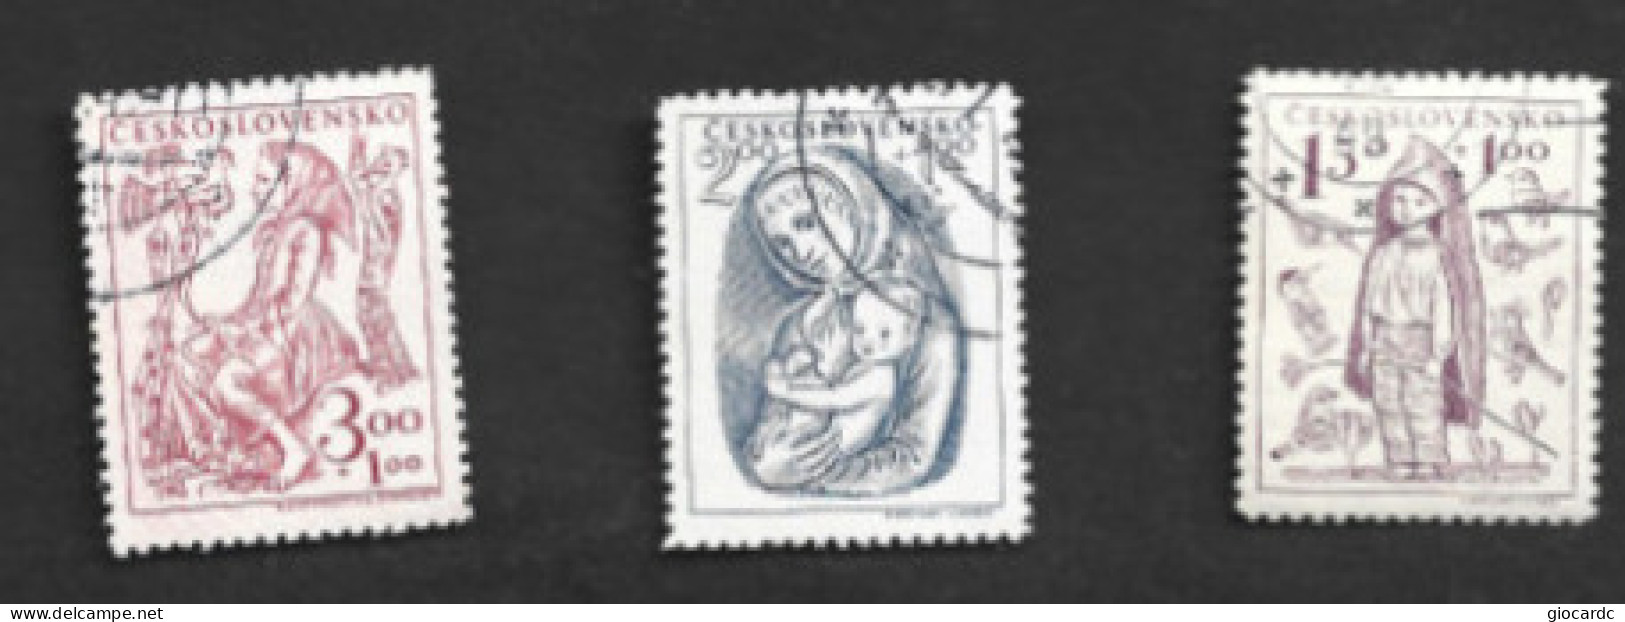 CECOSLOVACCHIA (CZECHOSLOVAKIA) - SG 532.534  - 1948 CHILD WELFARE (COMPLET SET OF 3) - USED - Gebraucht